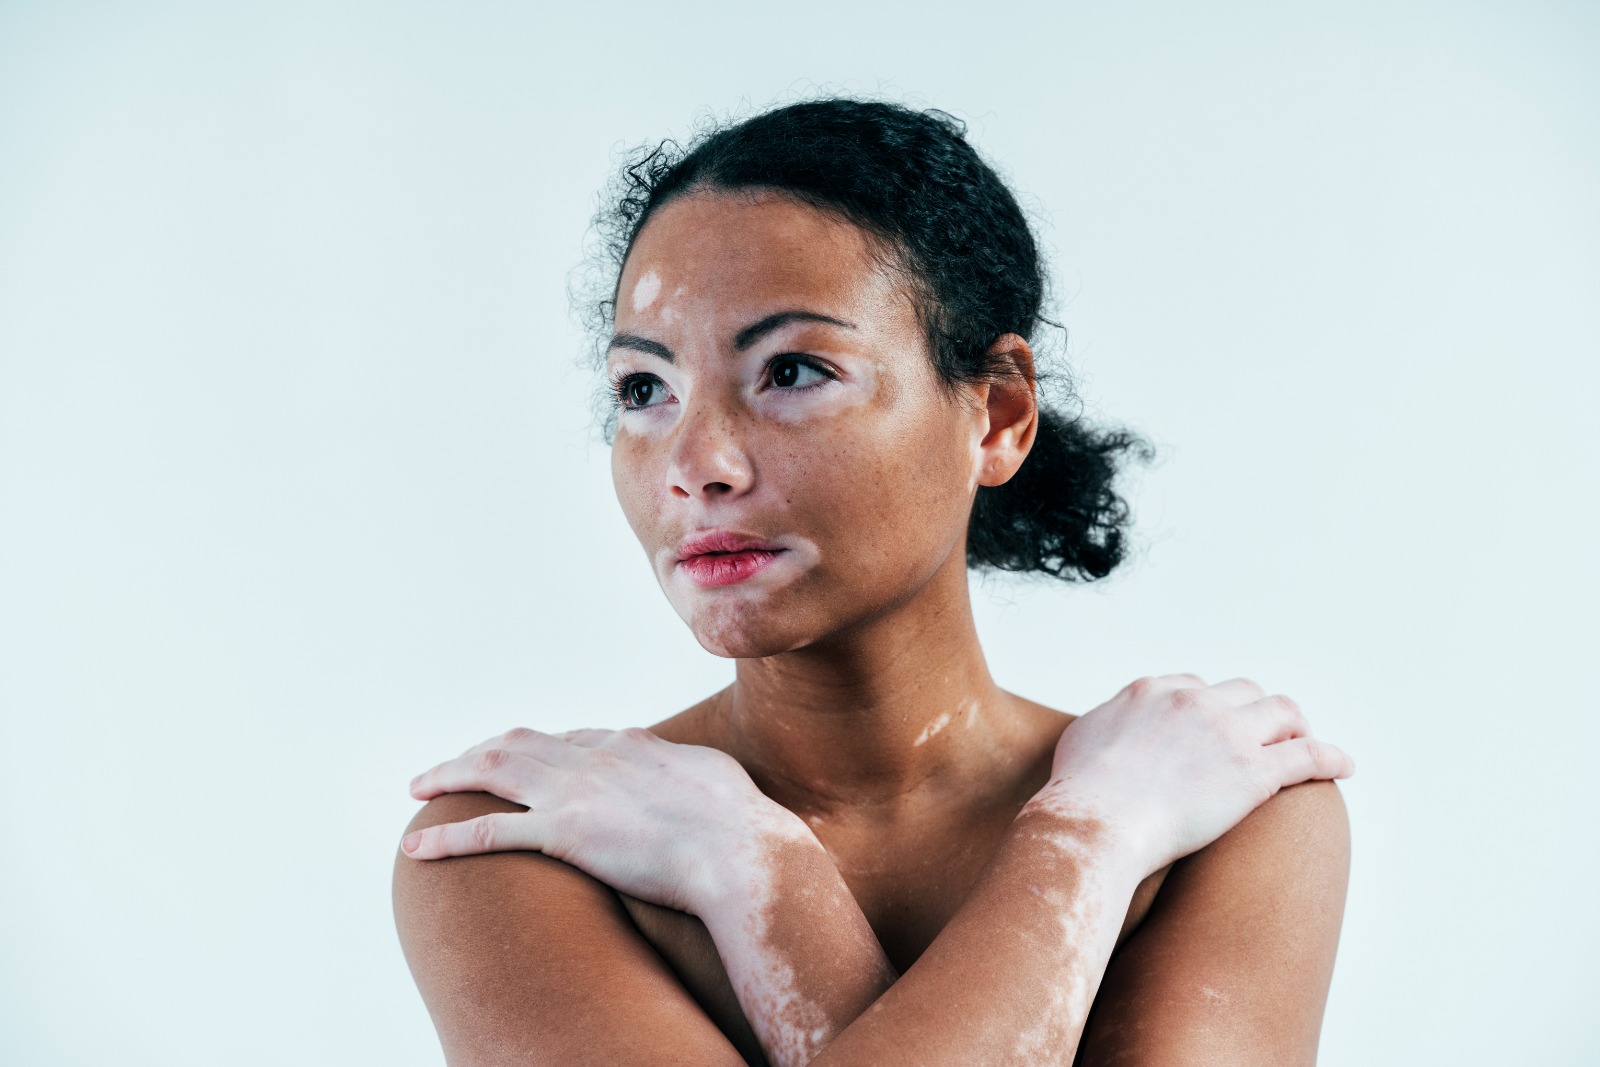 Which medicine is helpful for vitiligo?